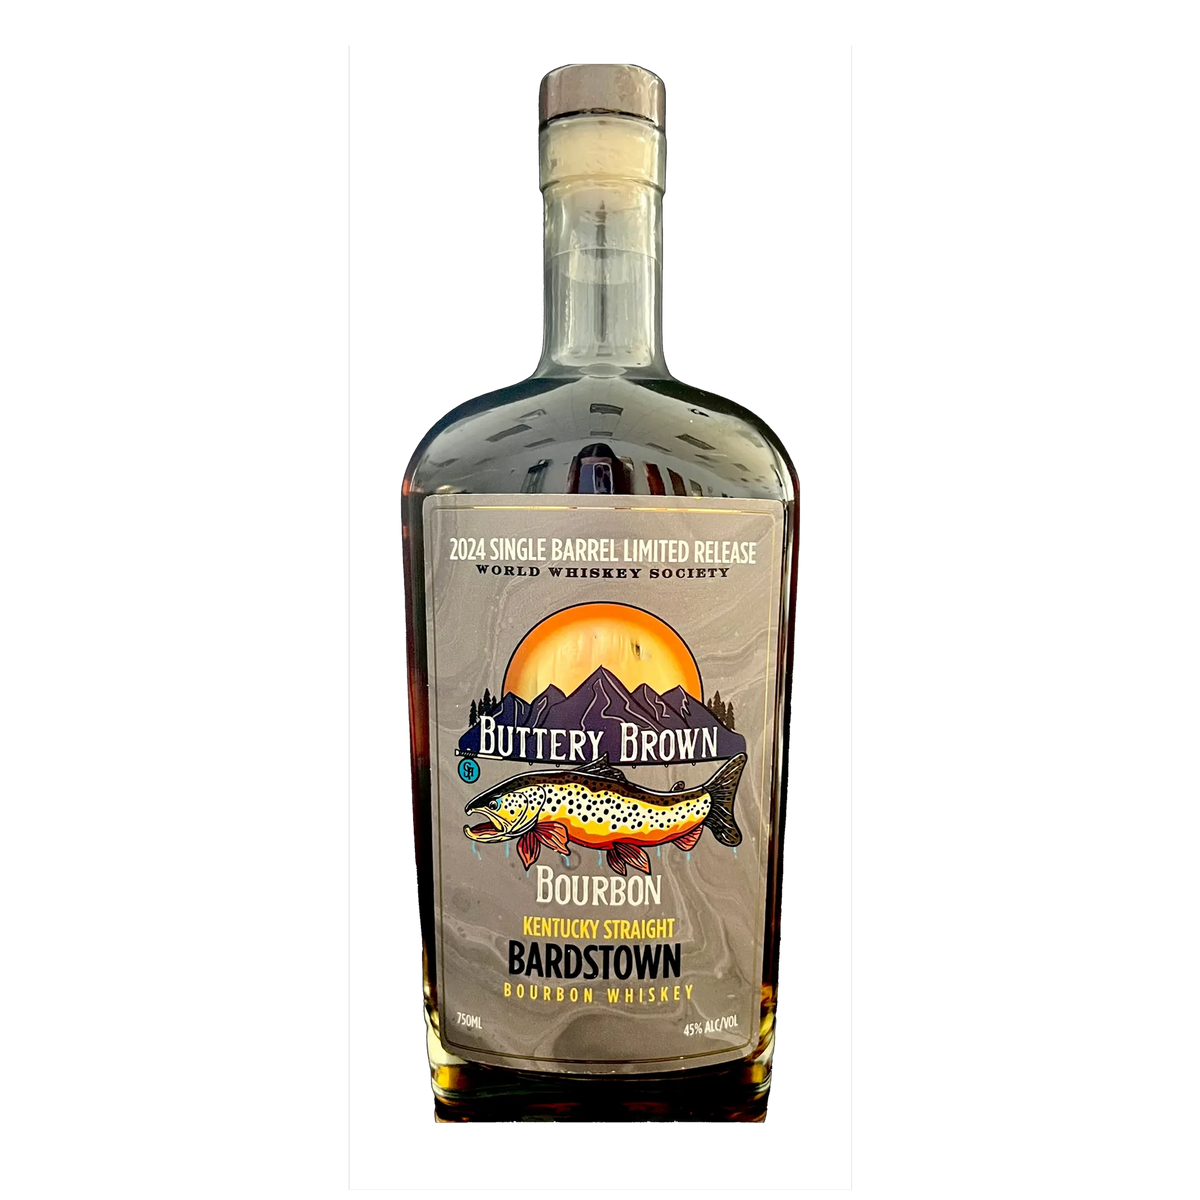 Buttery Brown Bourbon – Kentucky Straight Bardstown Bourbon Whiskey